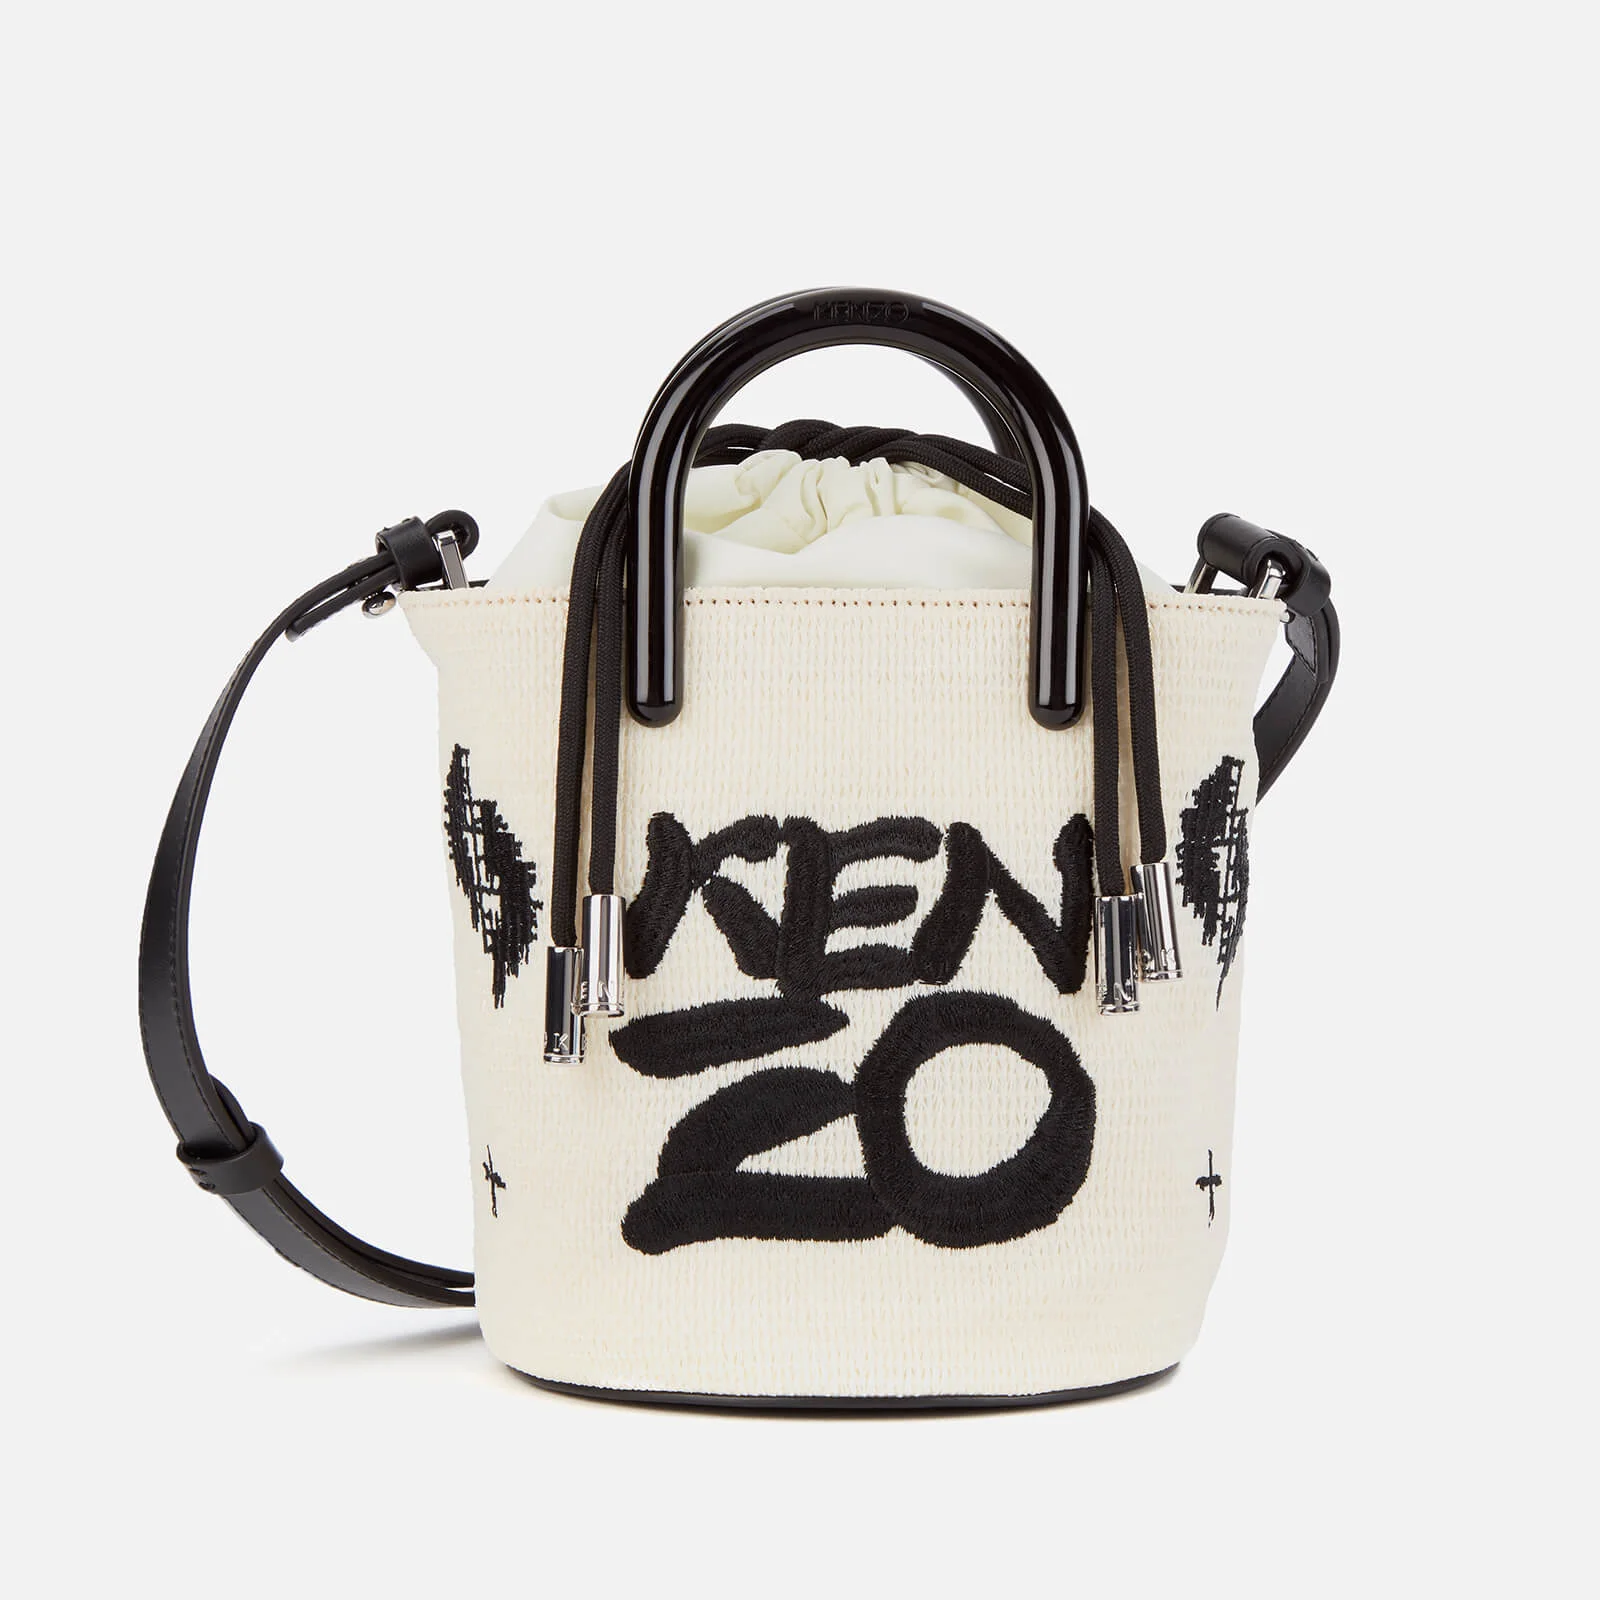 KENZO Women's Mini Tote Bag - White Image 1